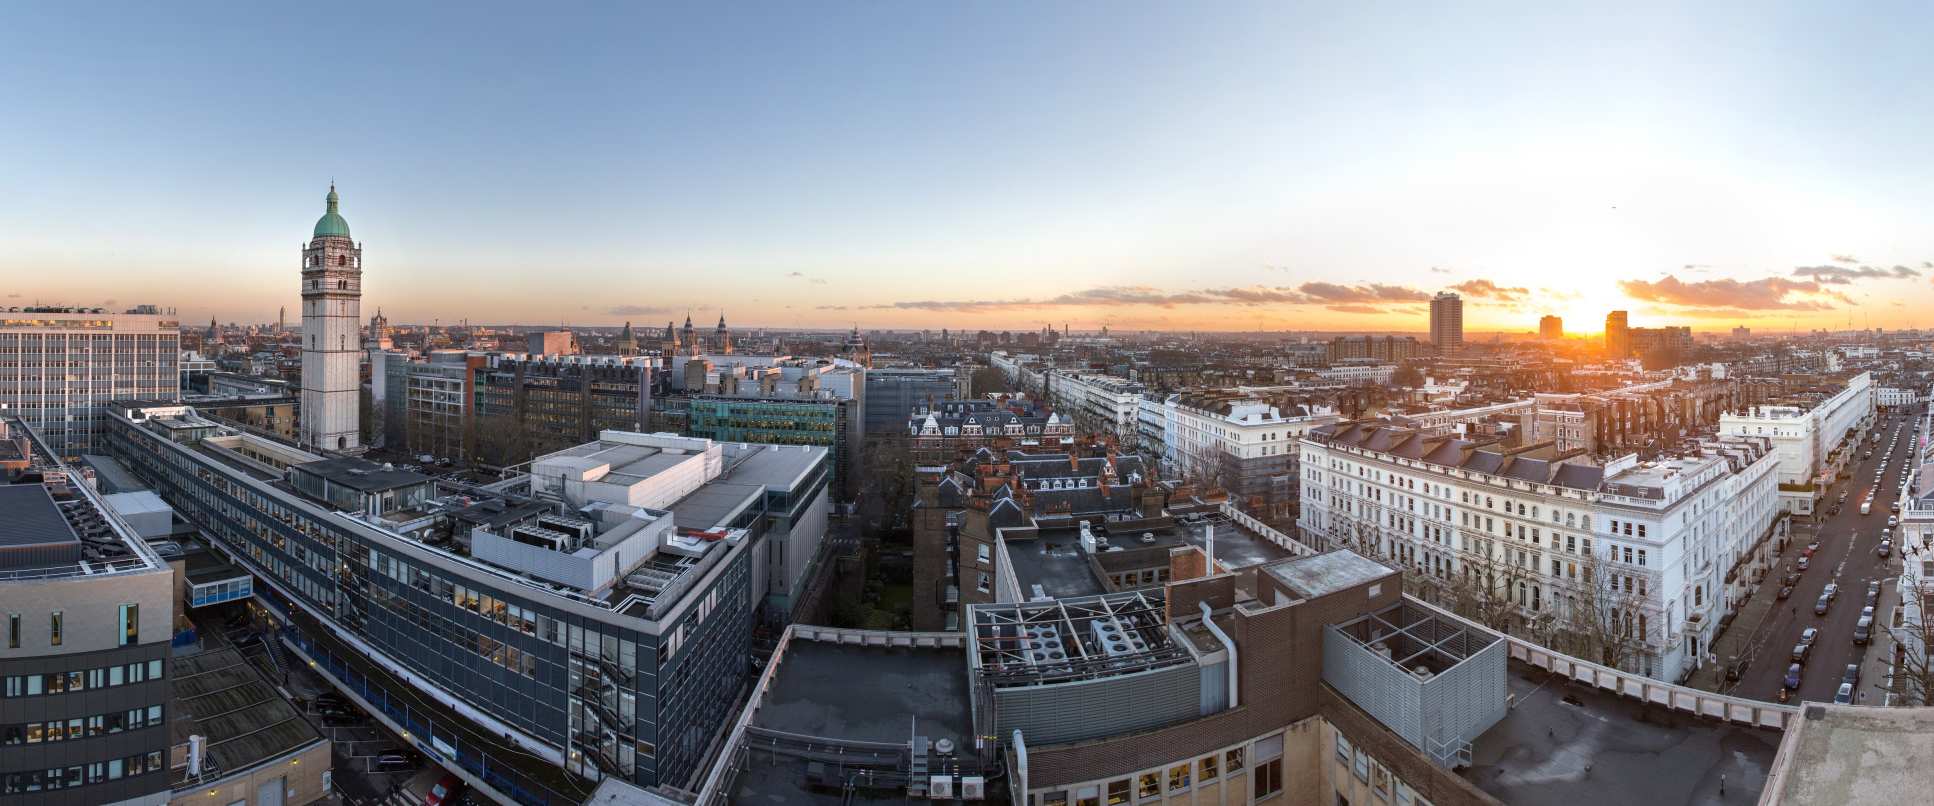 Panorama of South Kensington Campus